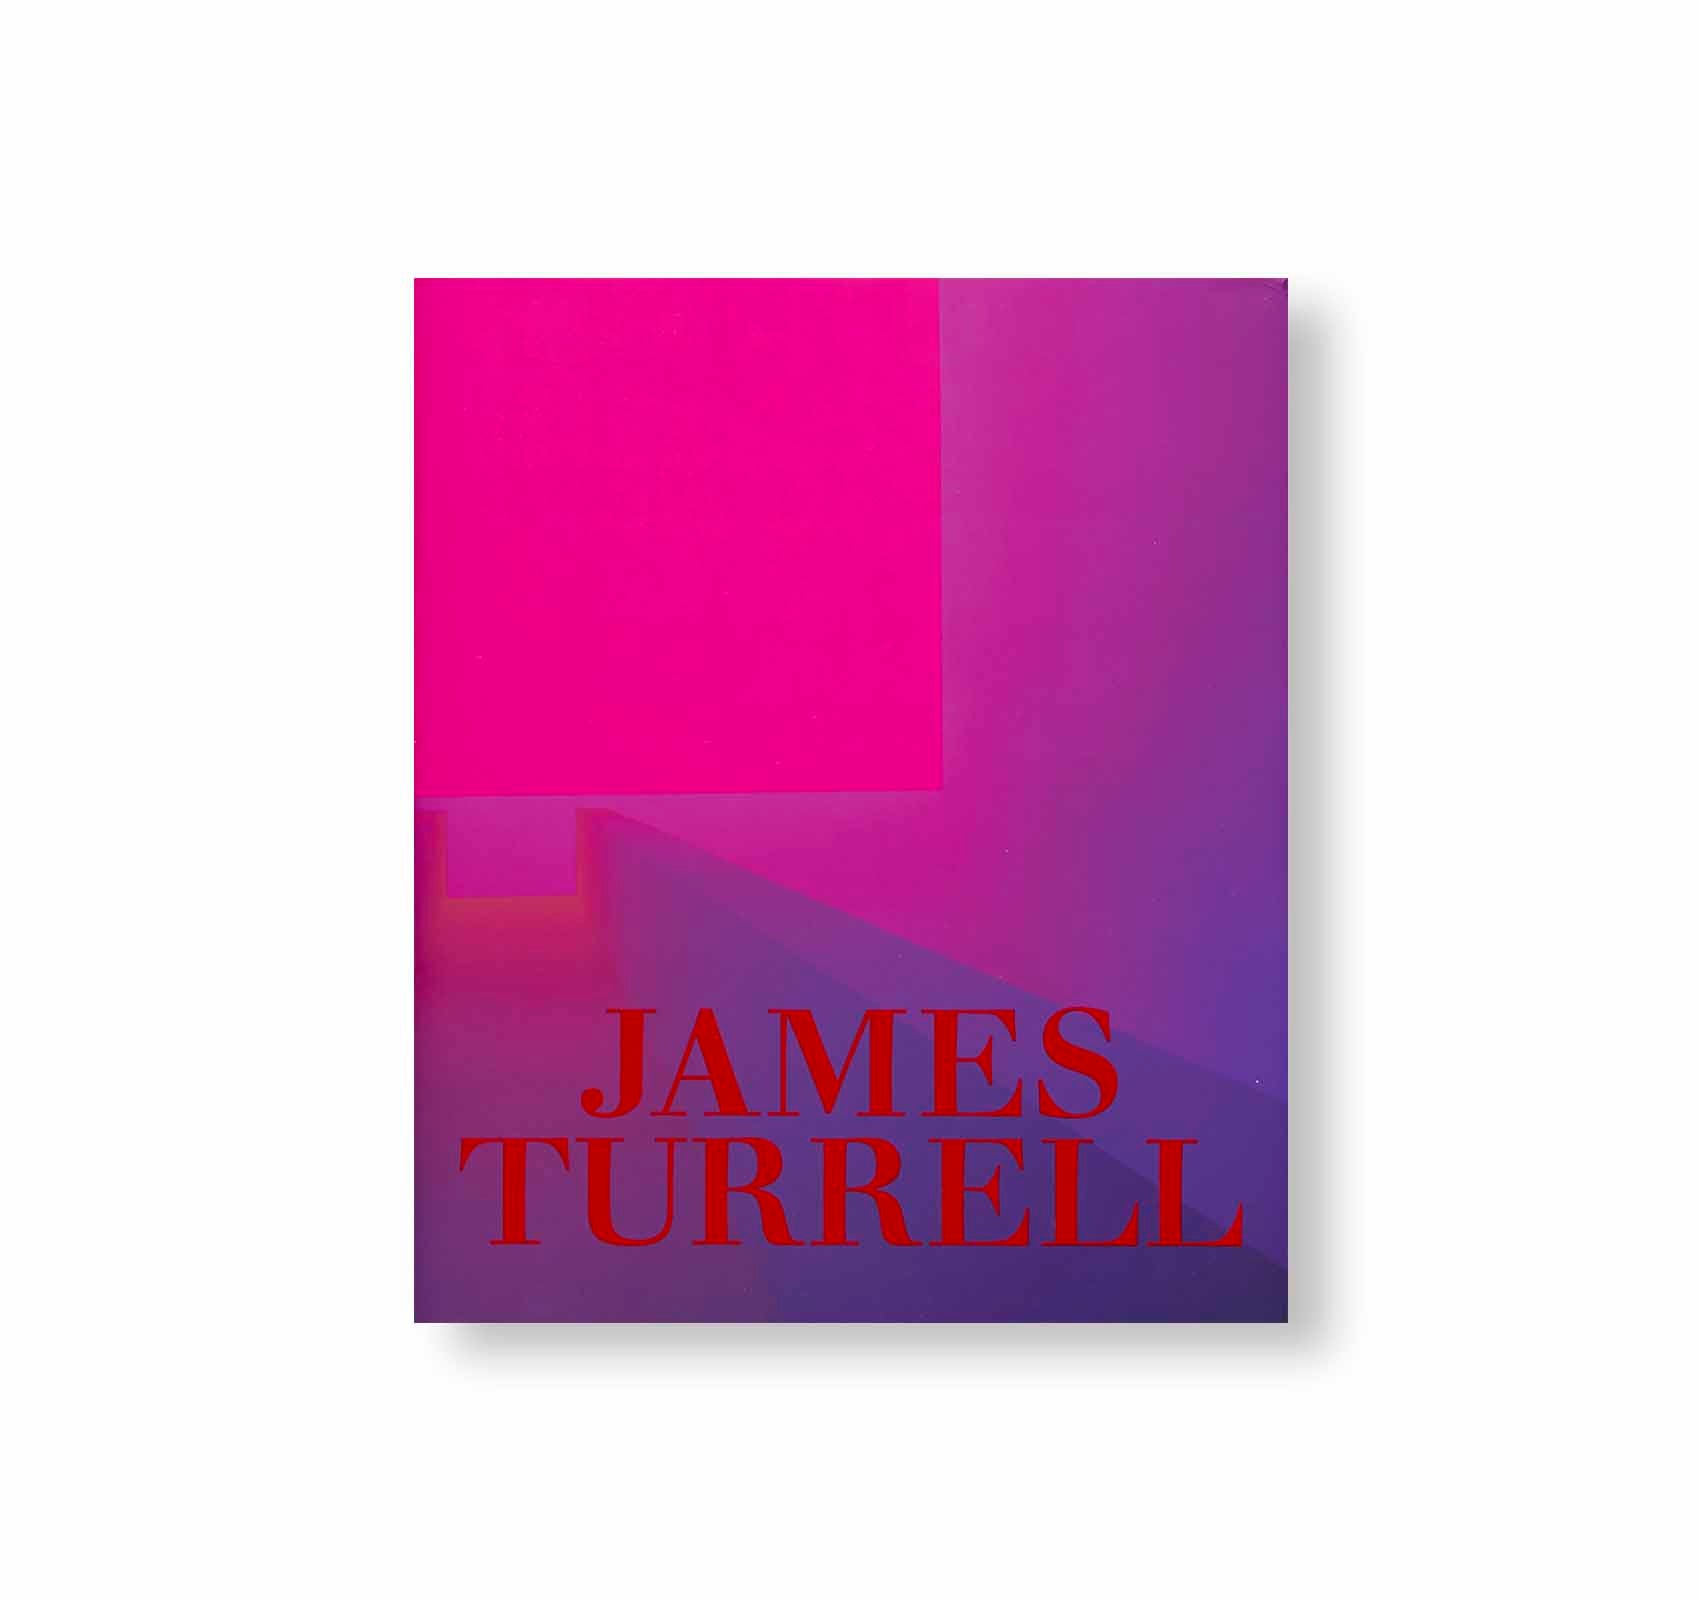 A RETROSPECTIVE by James Turrell – twelvebooks